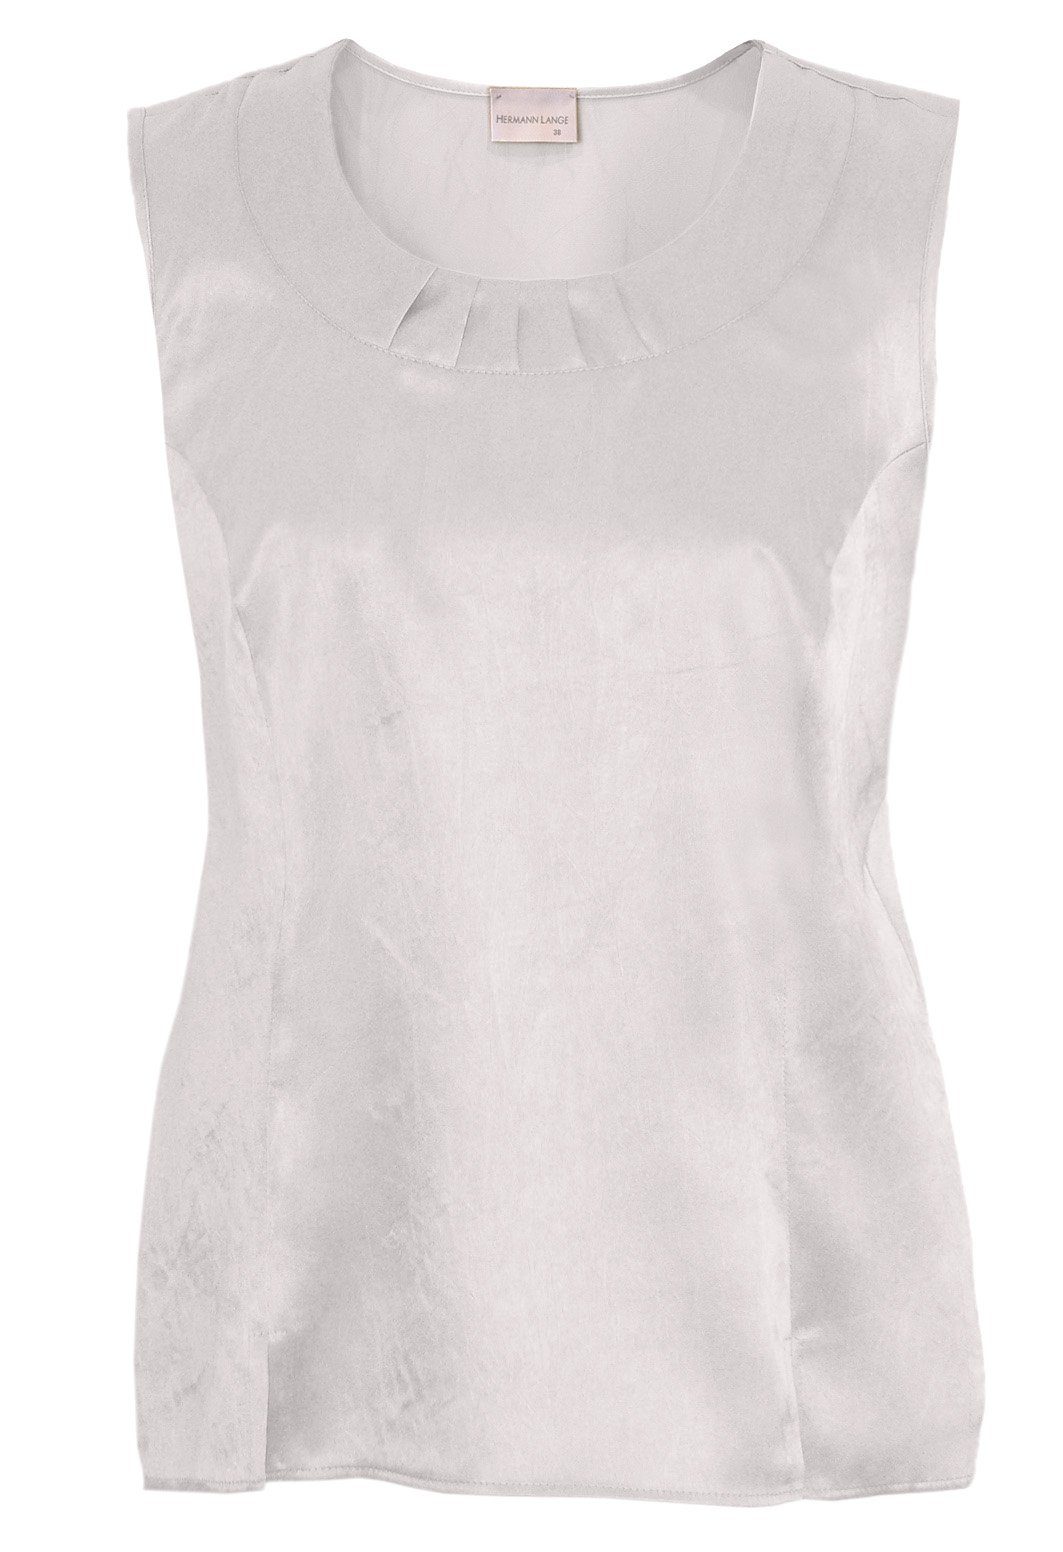 HERMANN LANGE Collection Kurzarmshirt off white